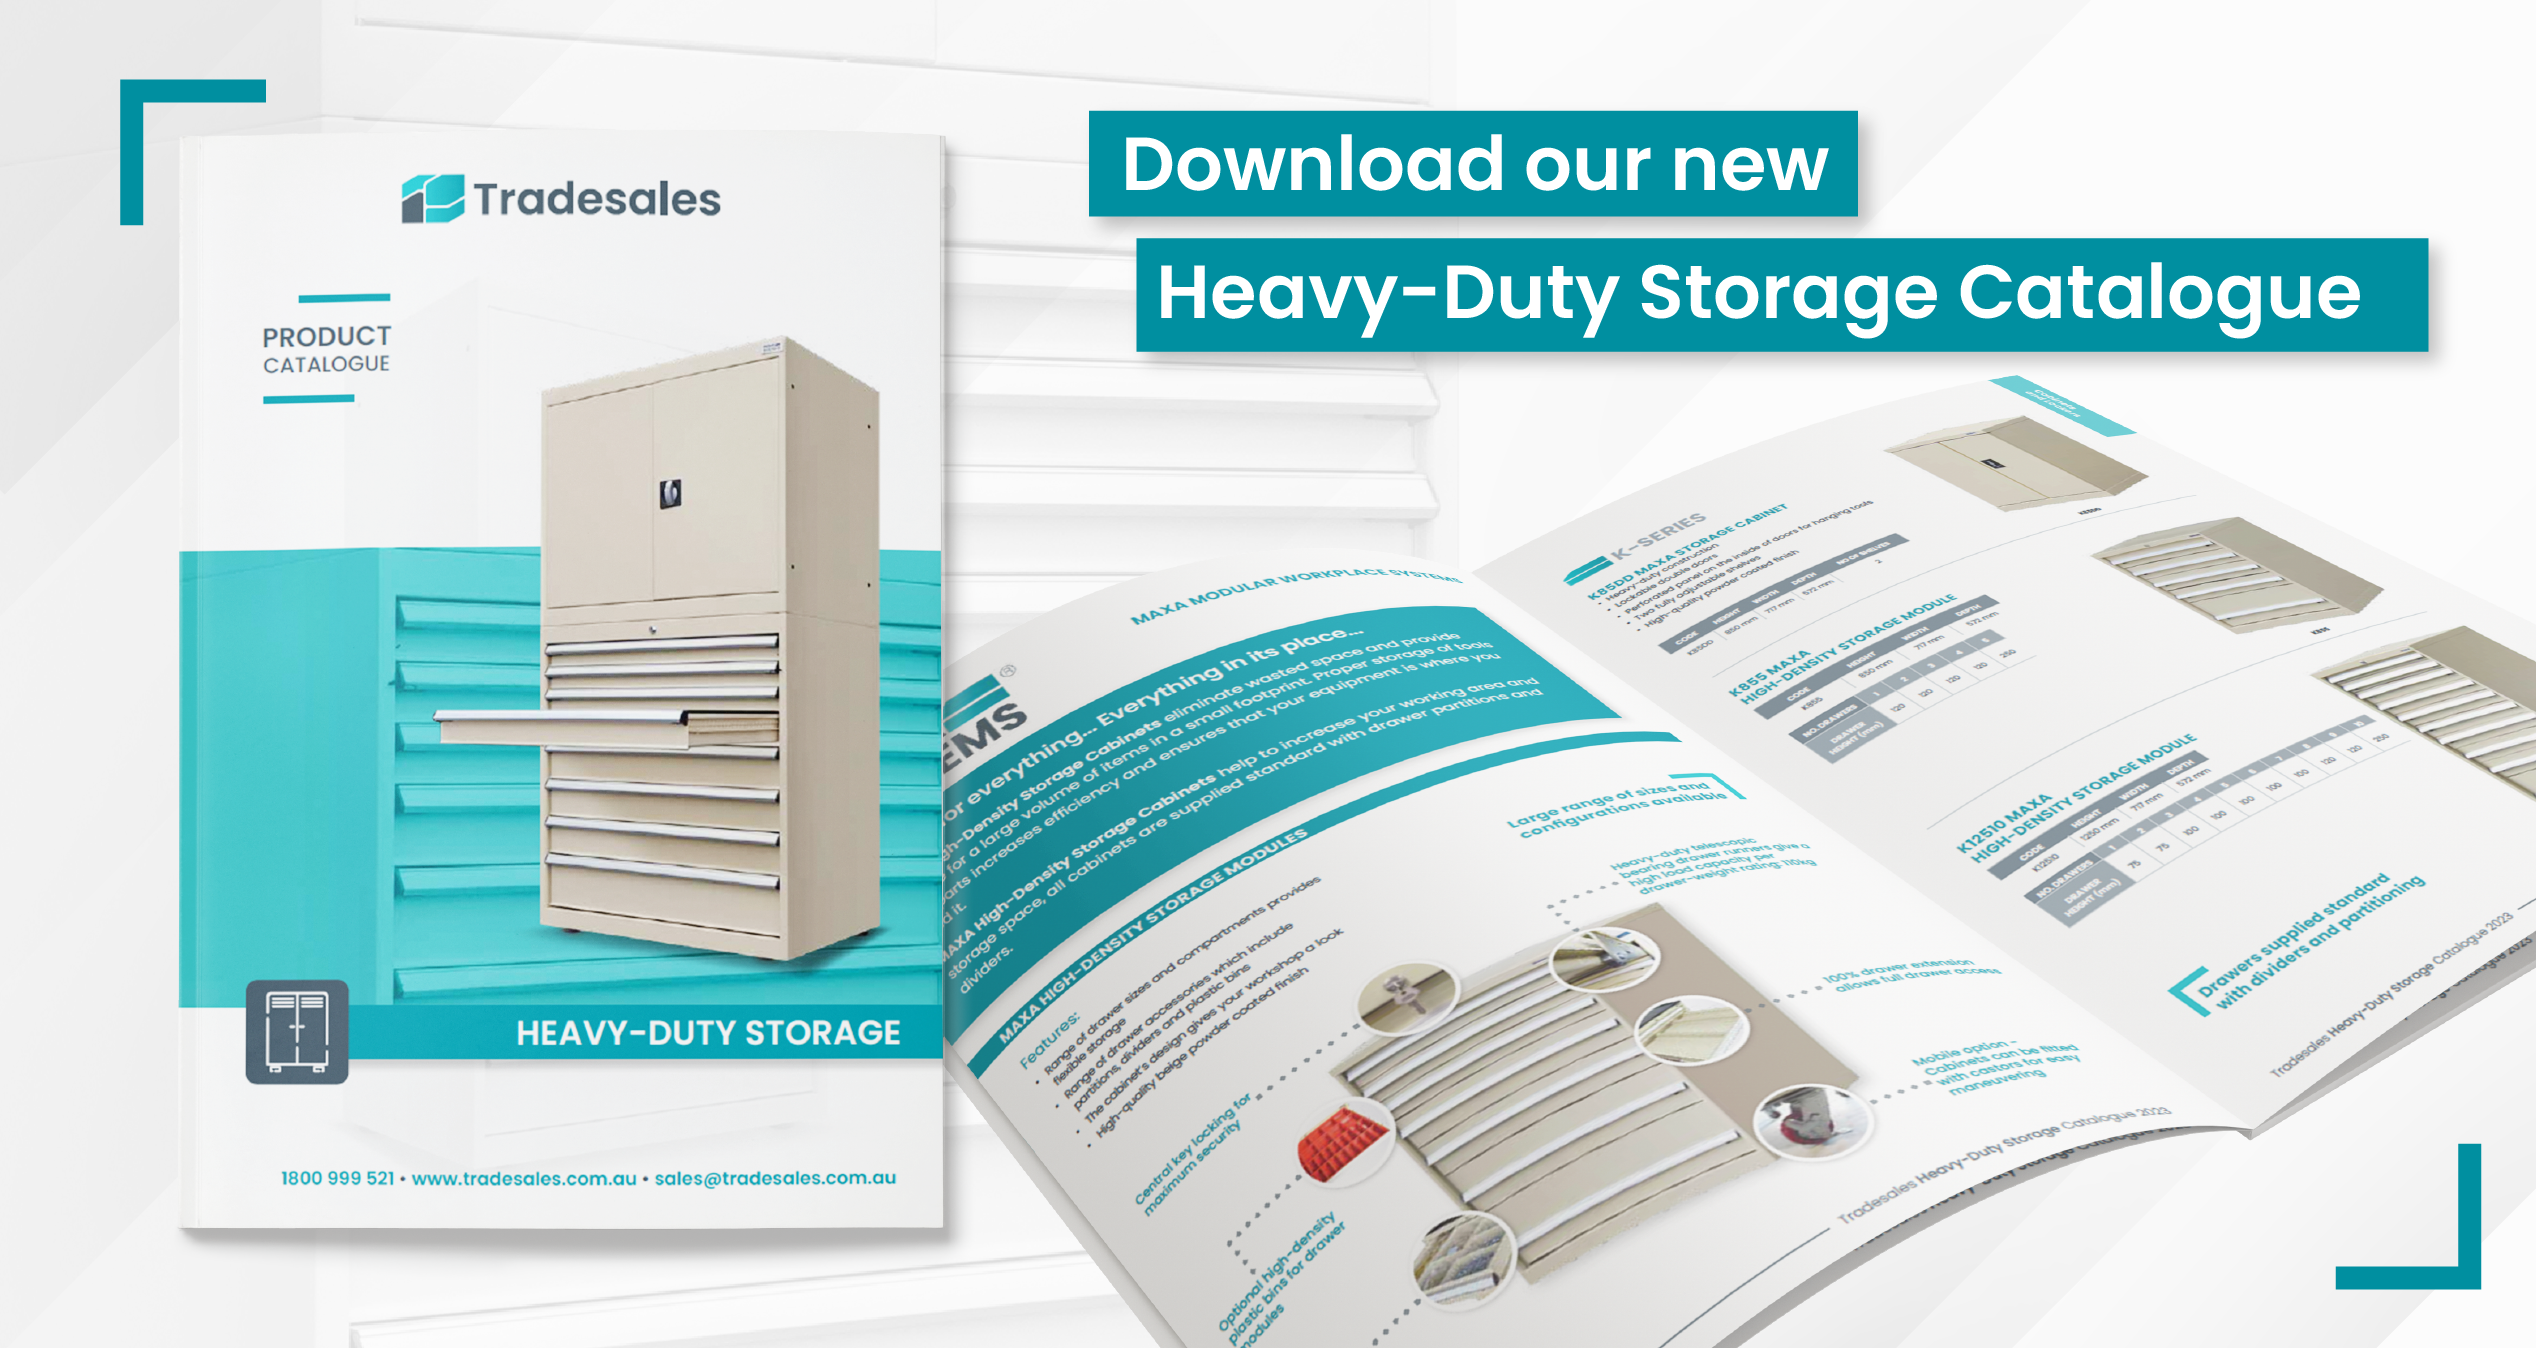 Tradesales Heavy-Duty Storage Catalogue